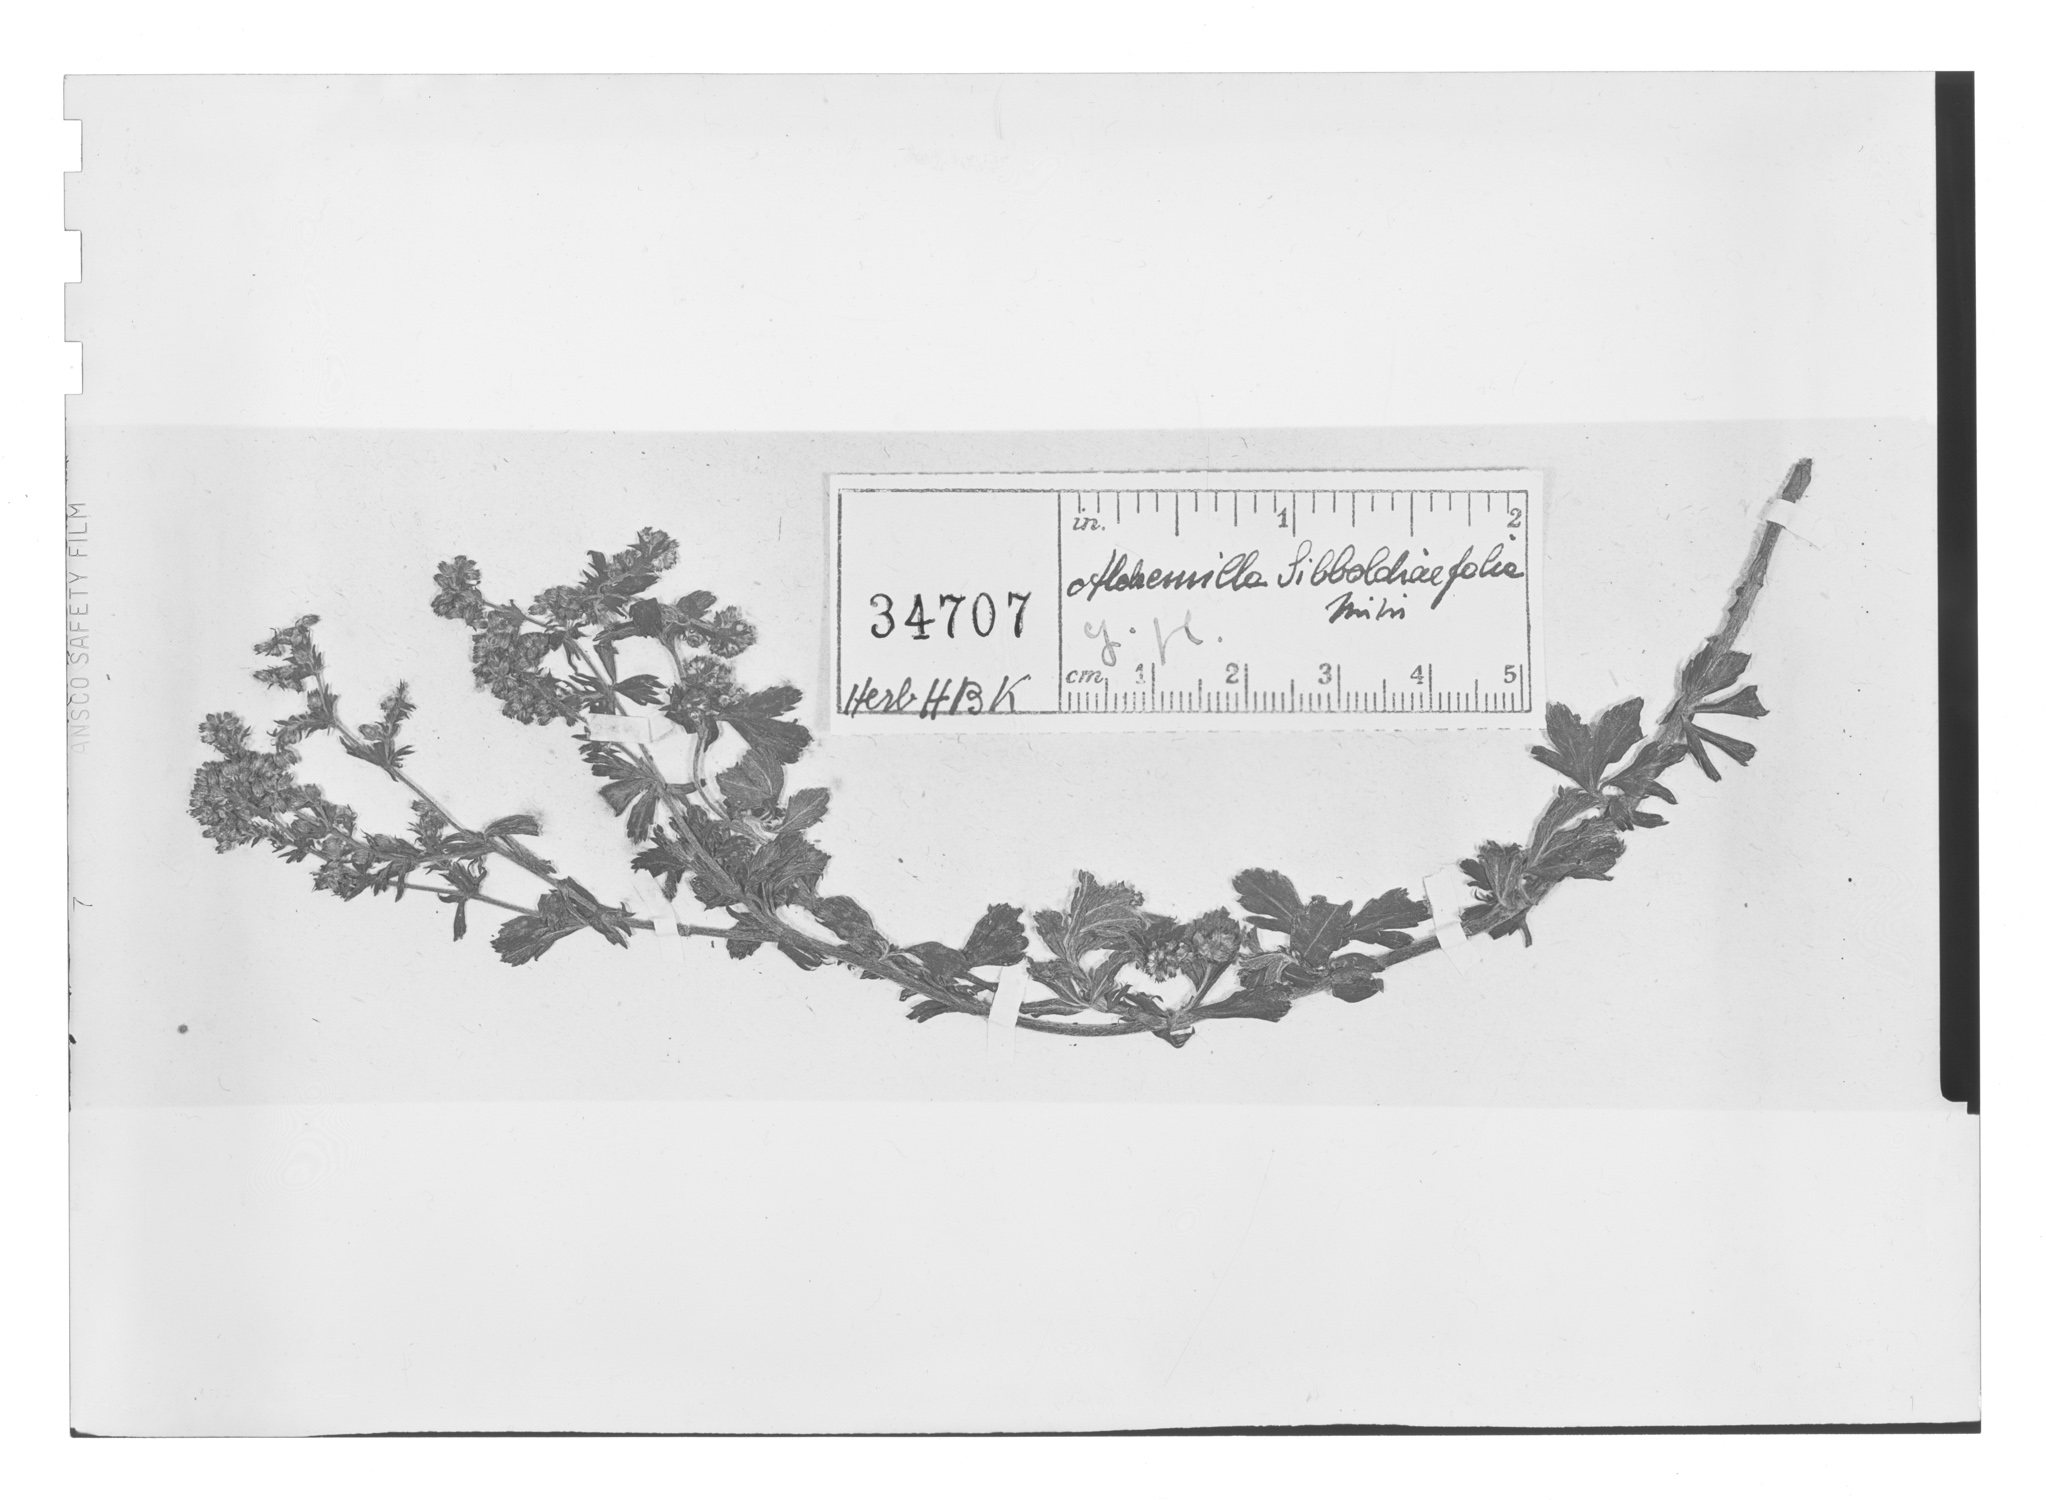 Alchemilla sibbaldiaefolia image